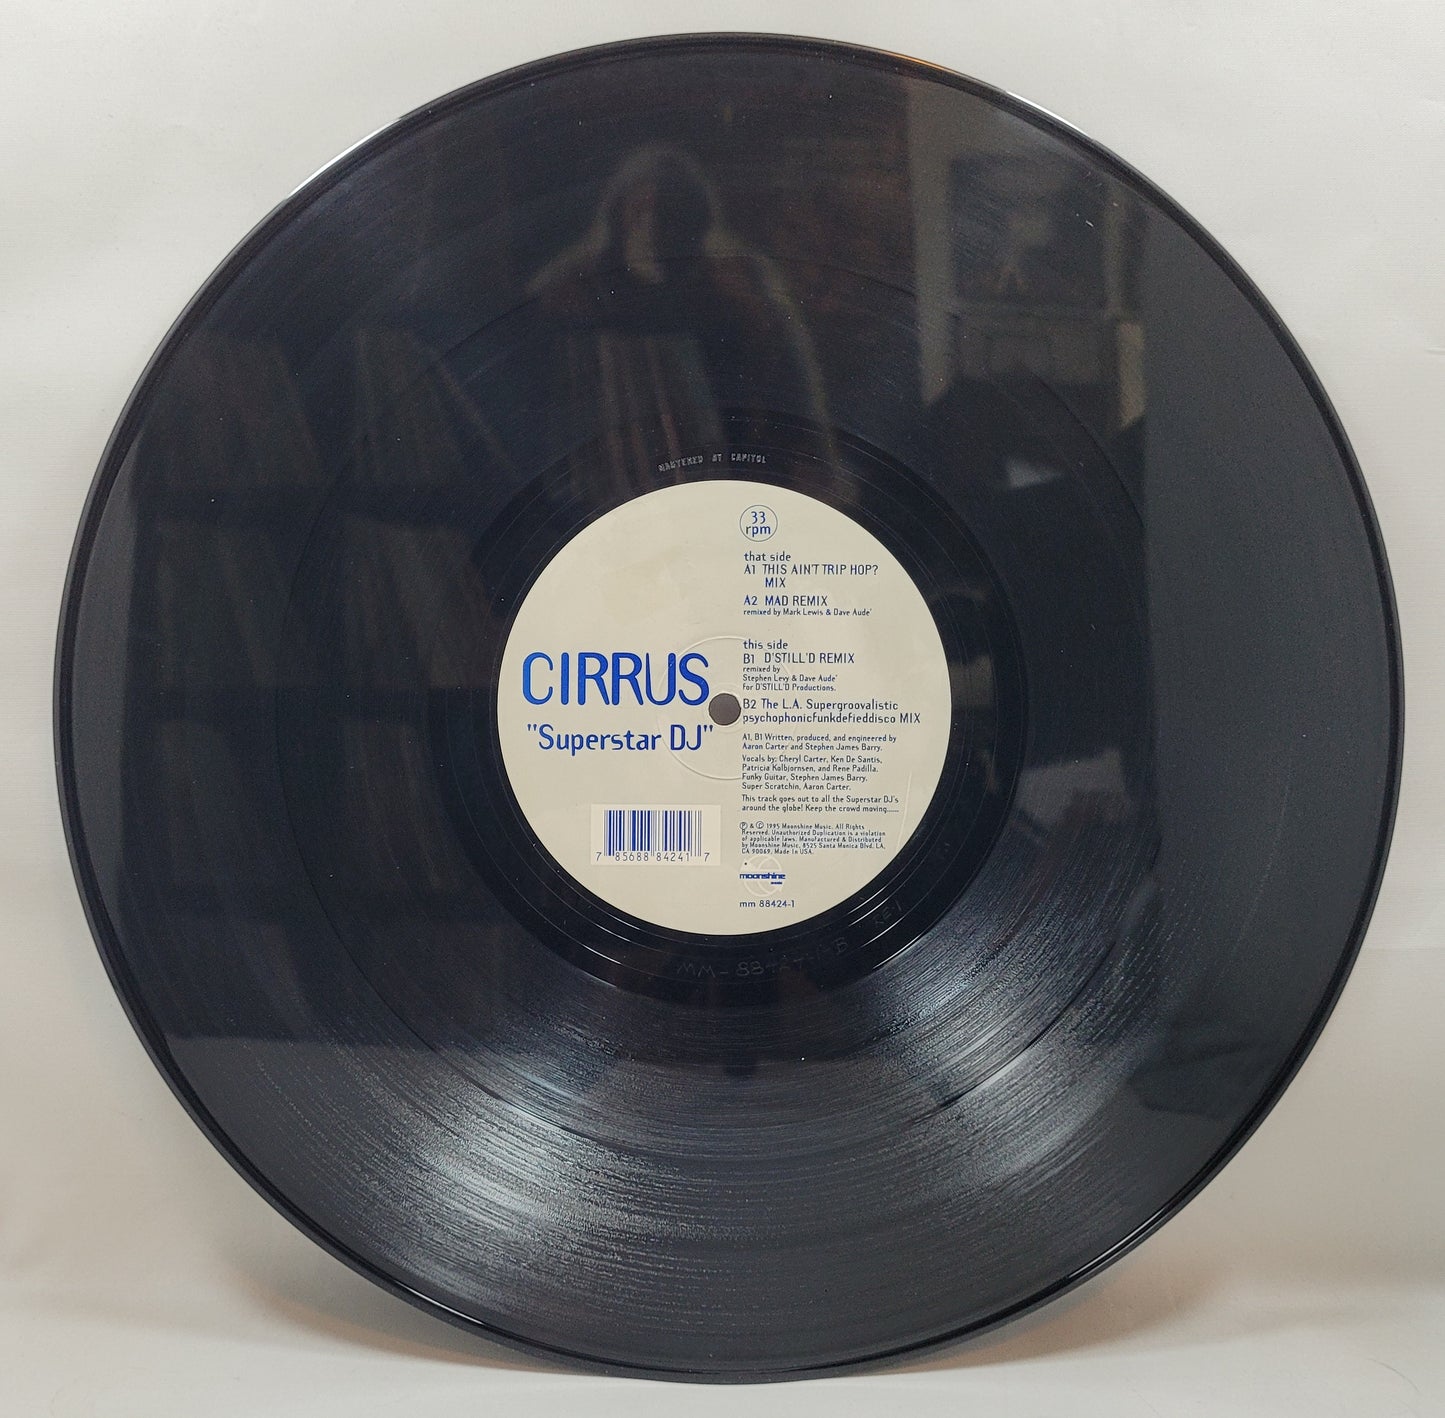 Cirrus - Superstar DJ [1995 Used Vinyl Record 12" Single]